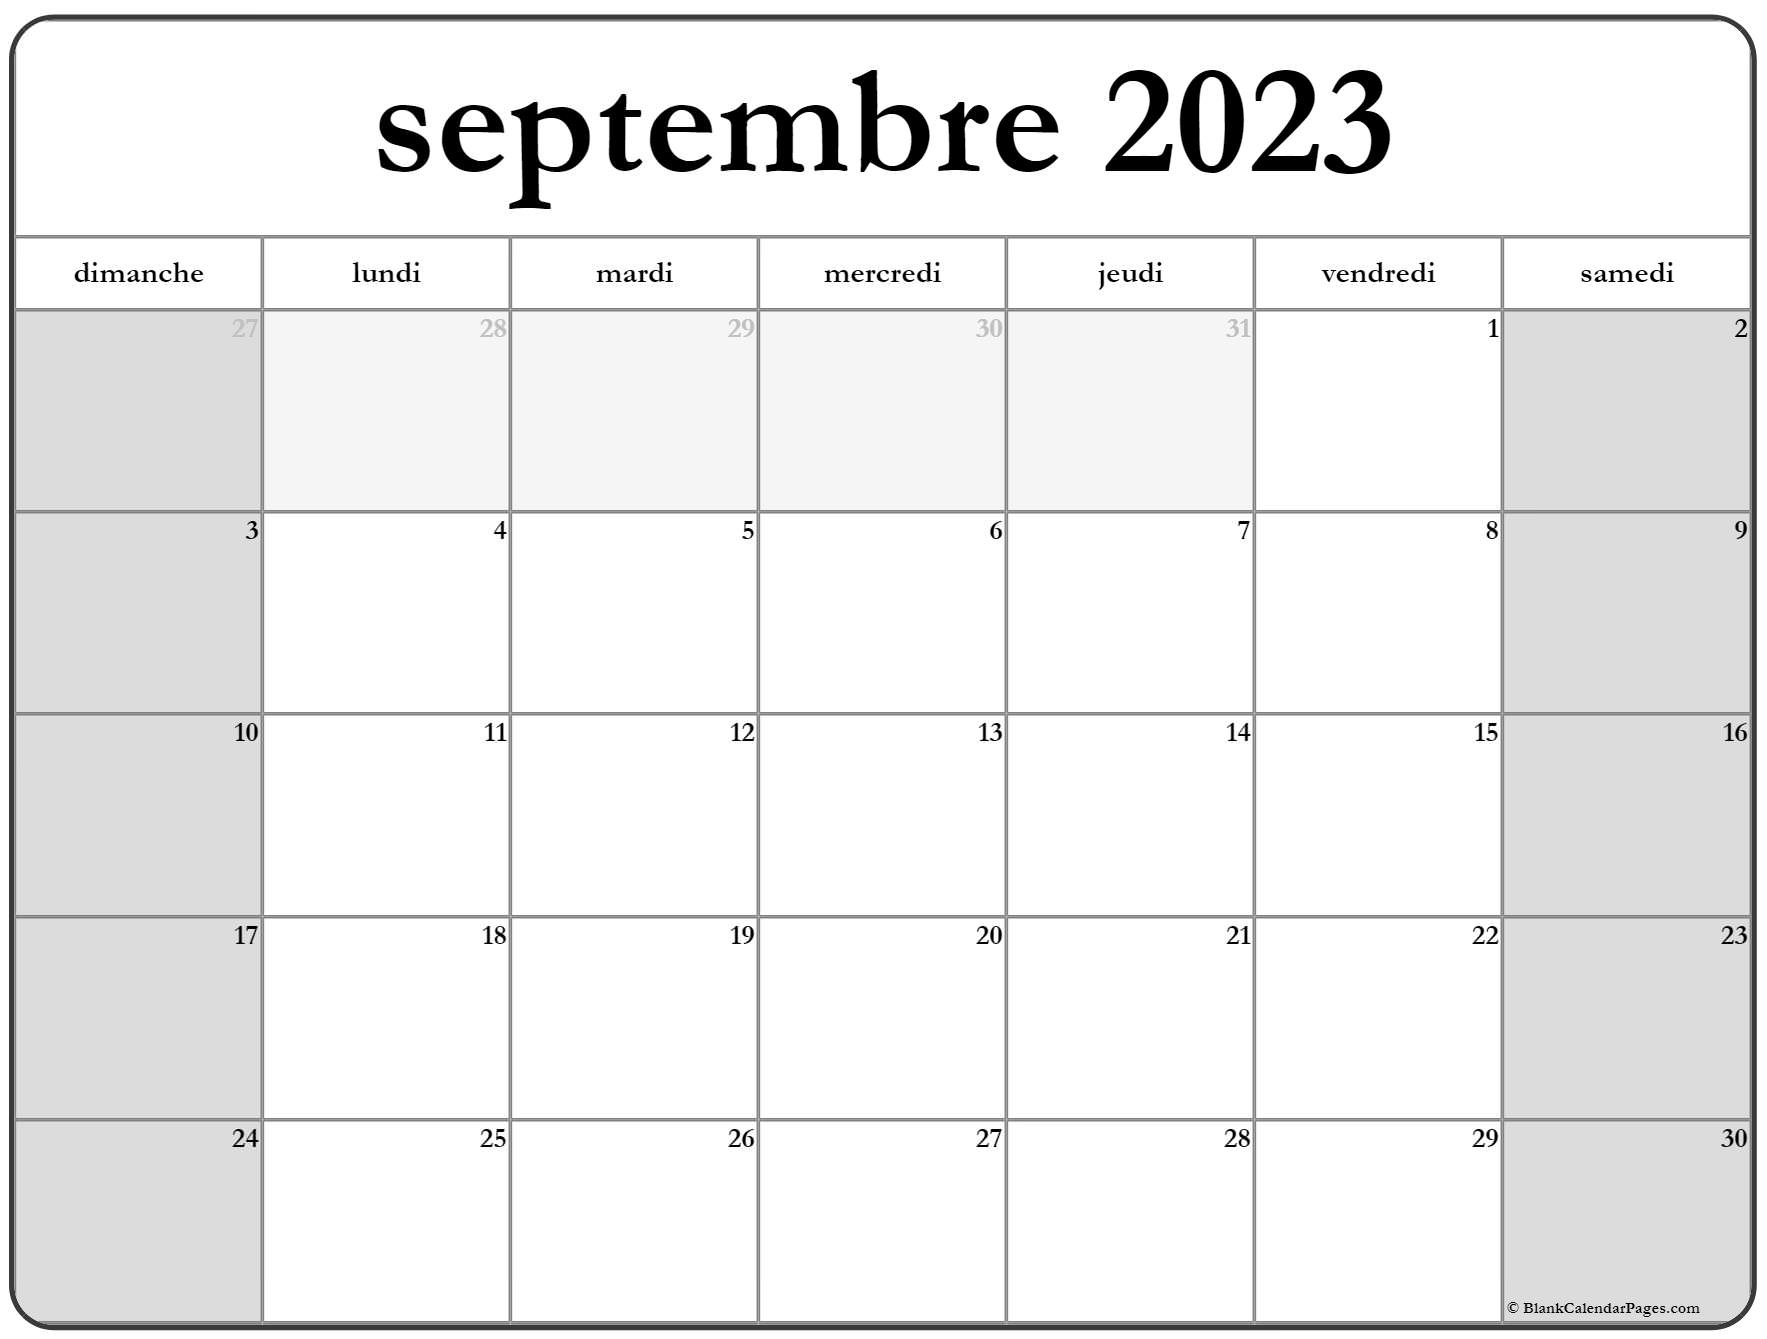 Lectures / Septembre 2023 - Nipette